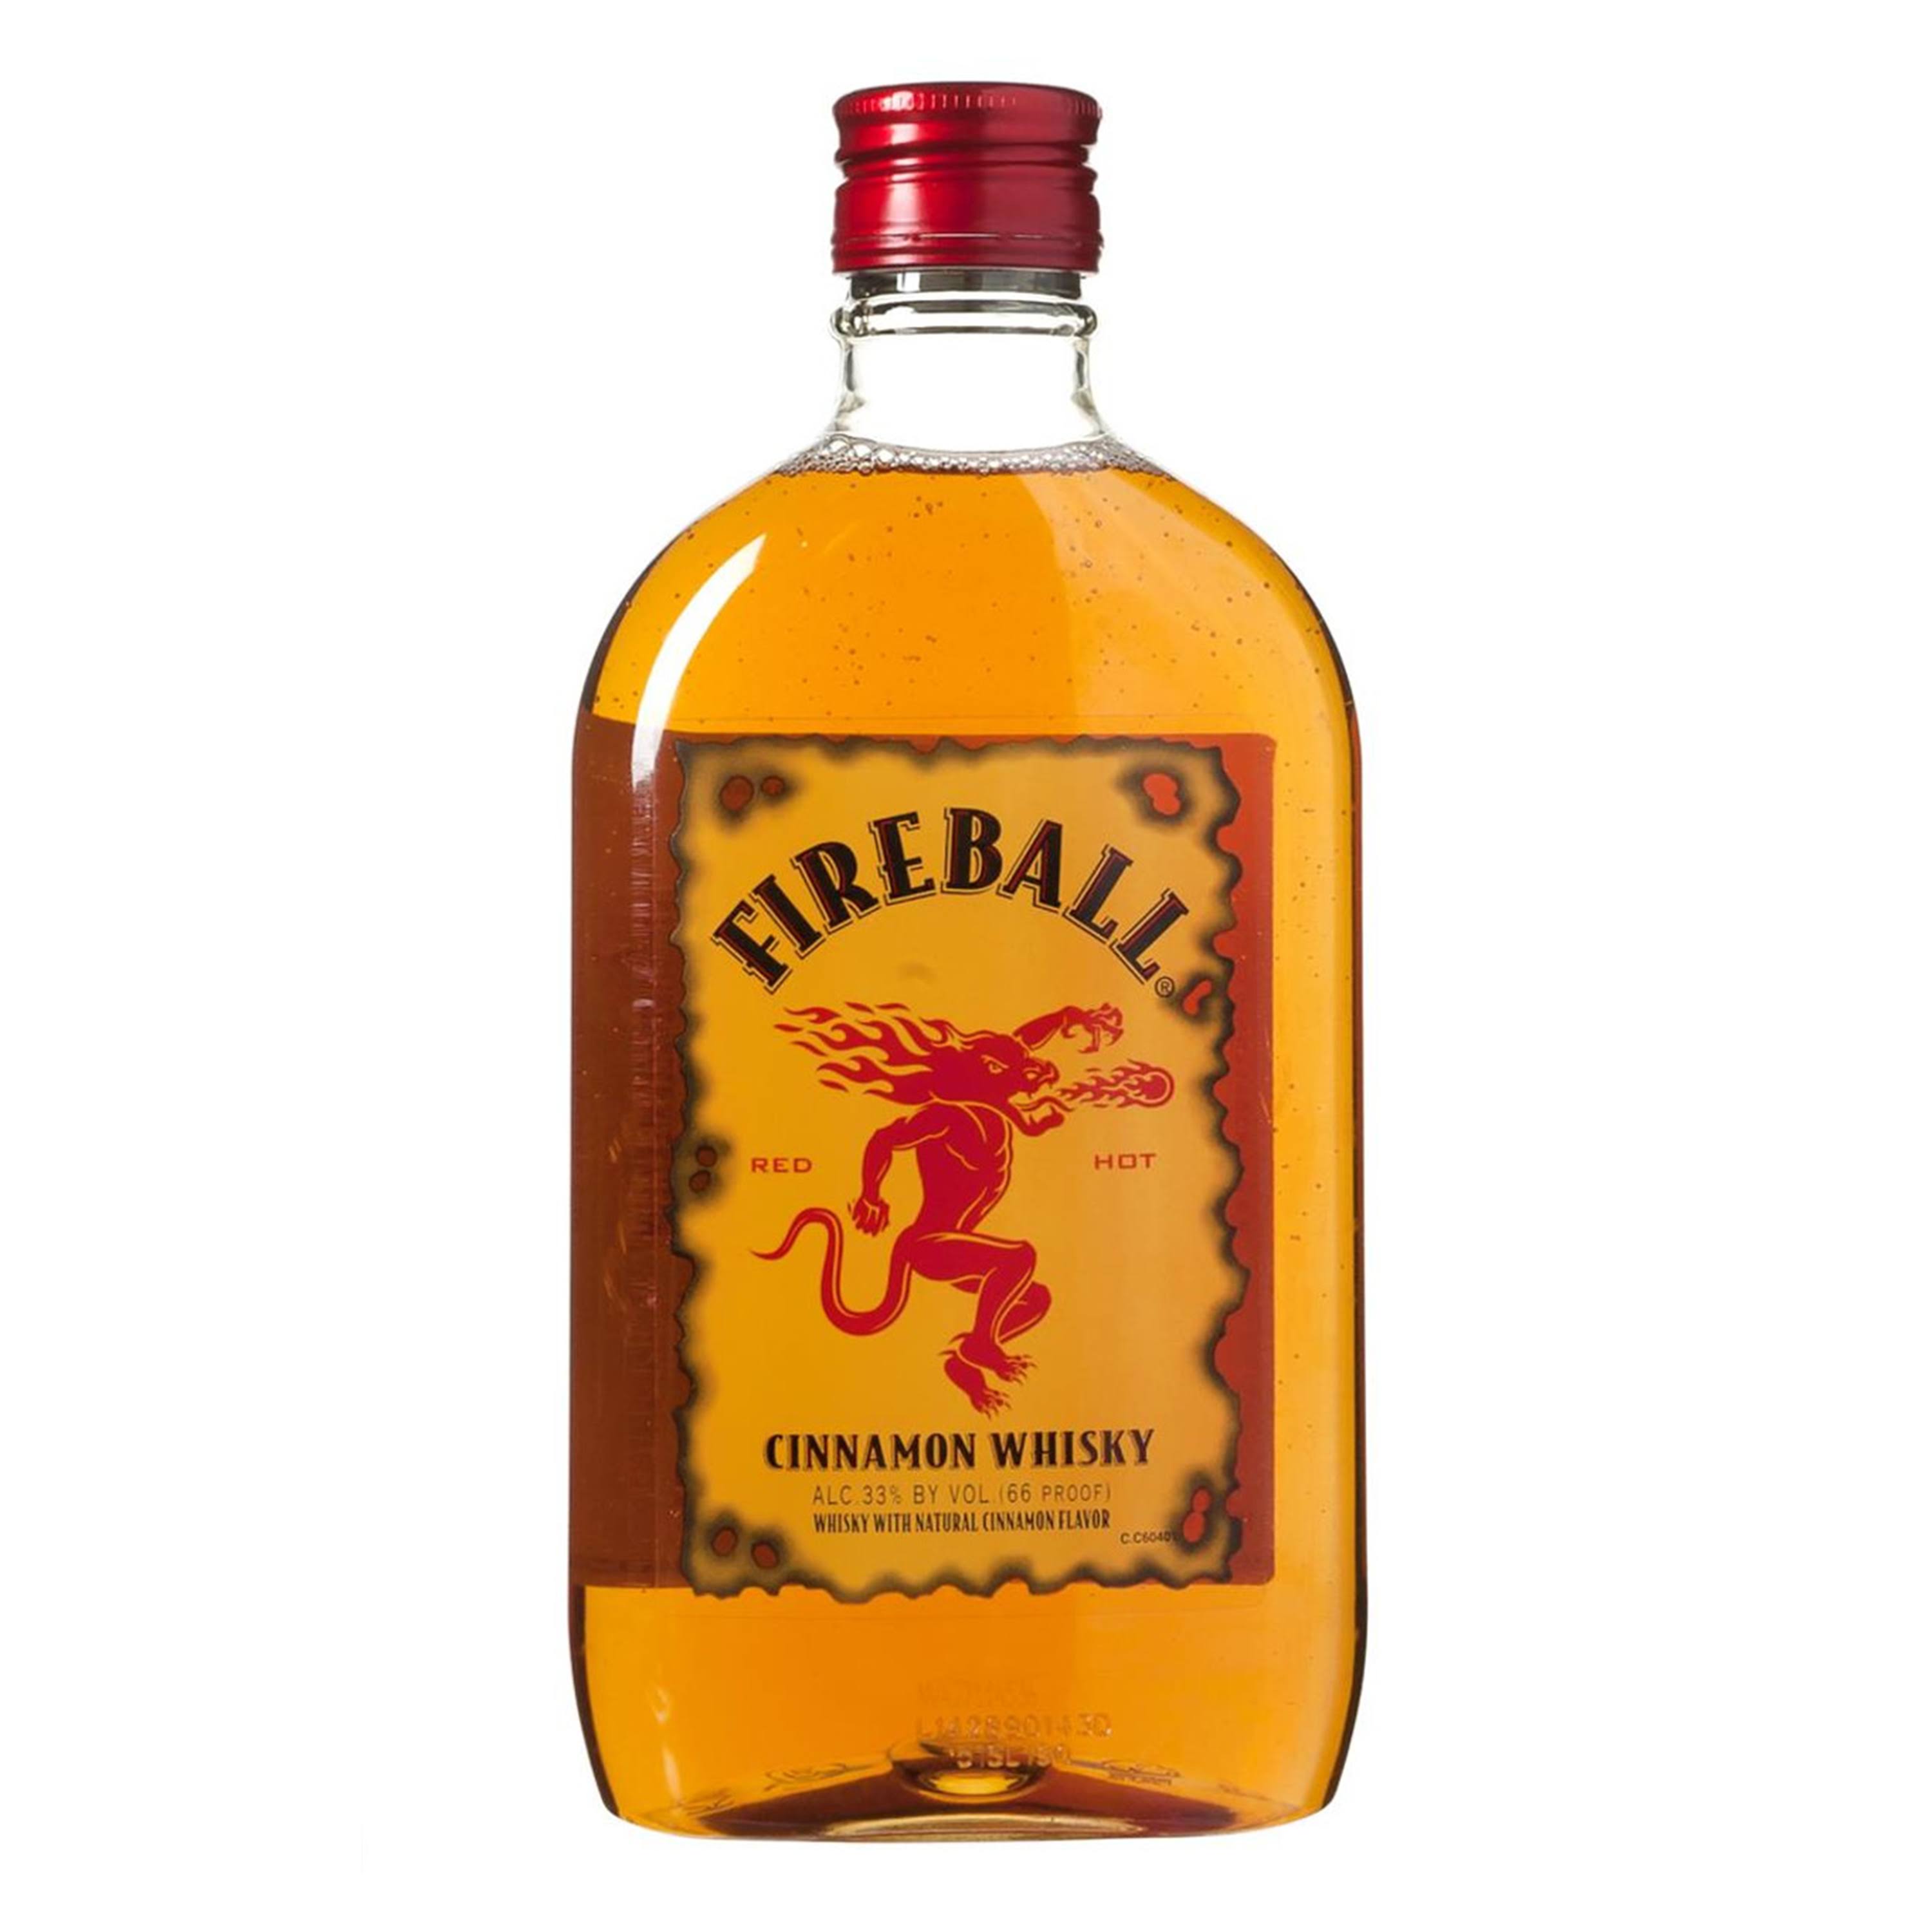 Fireball Whisky, Cinnamon - 375 ml